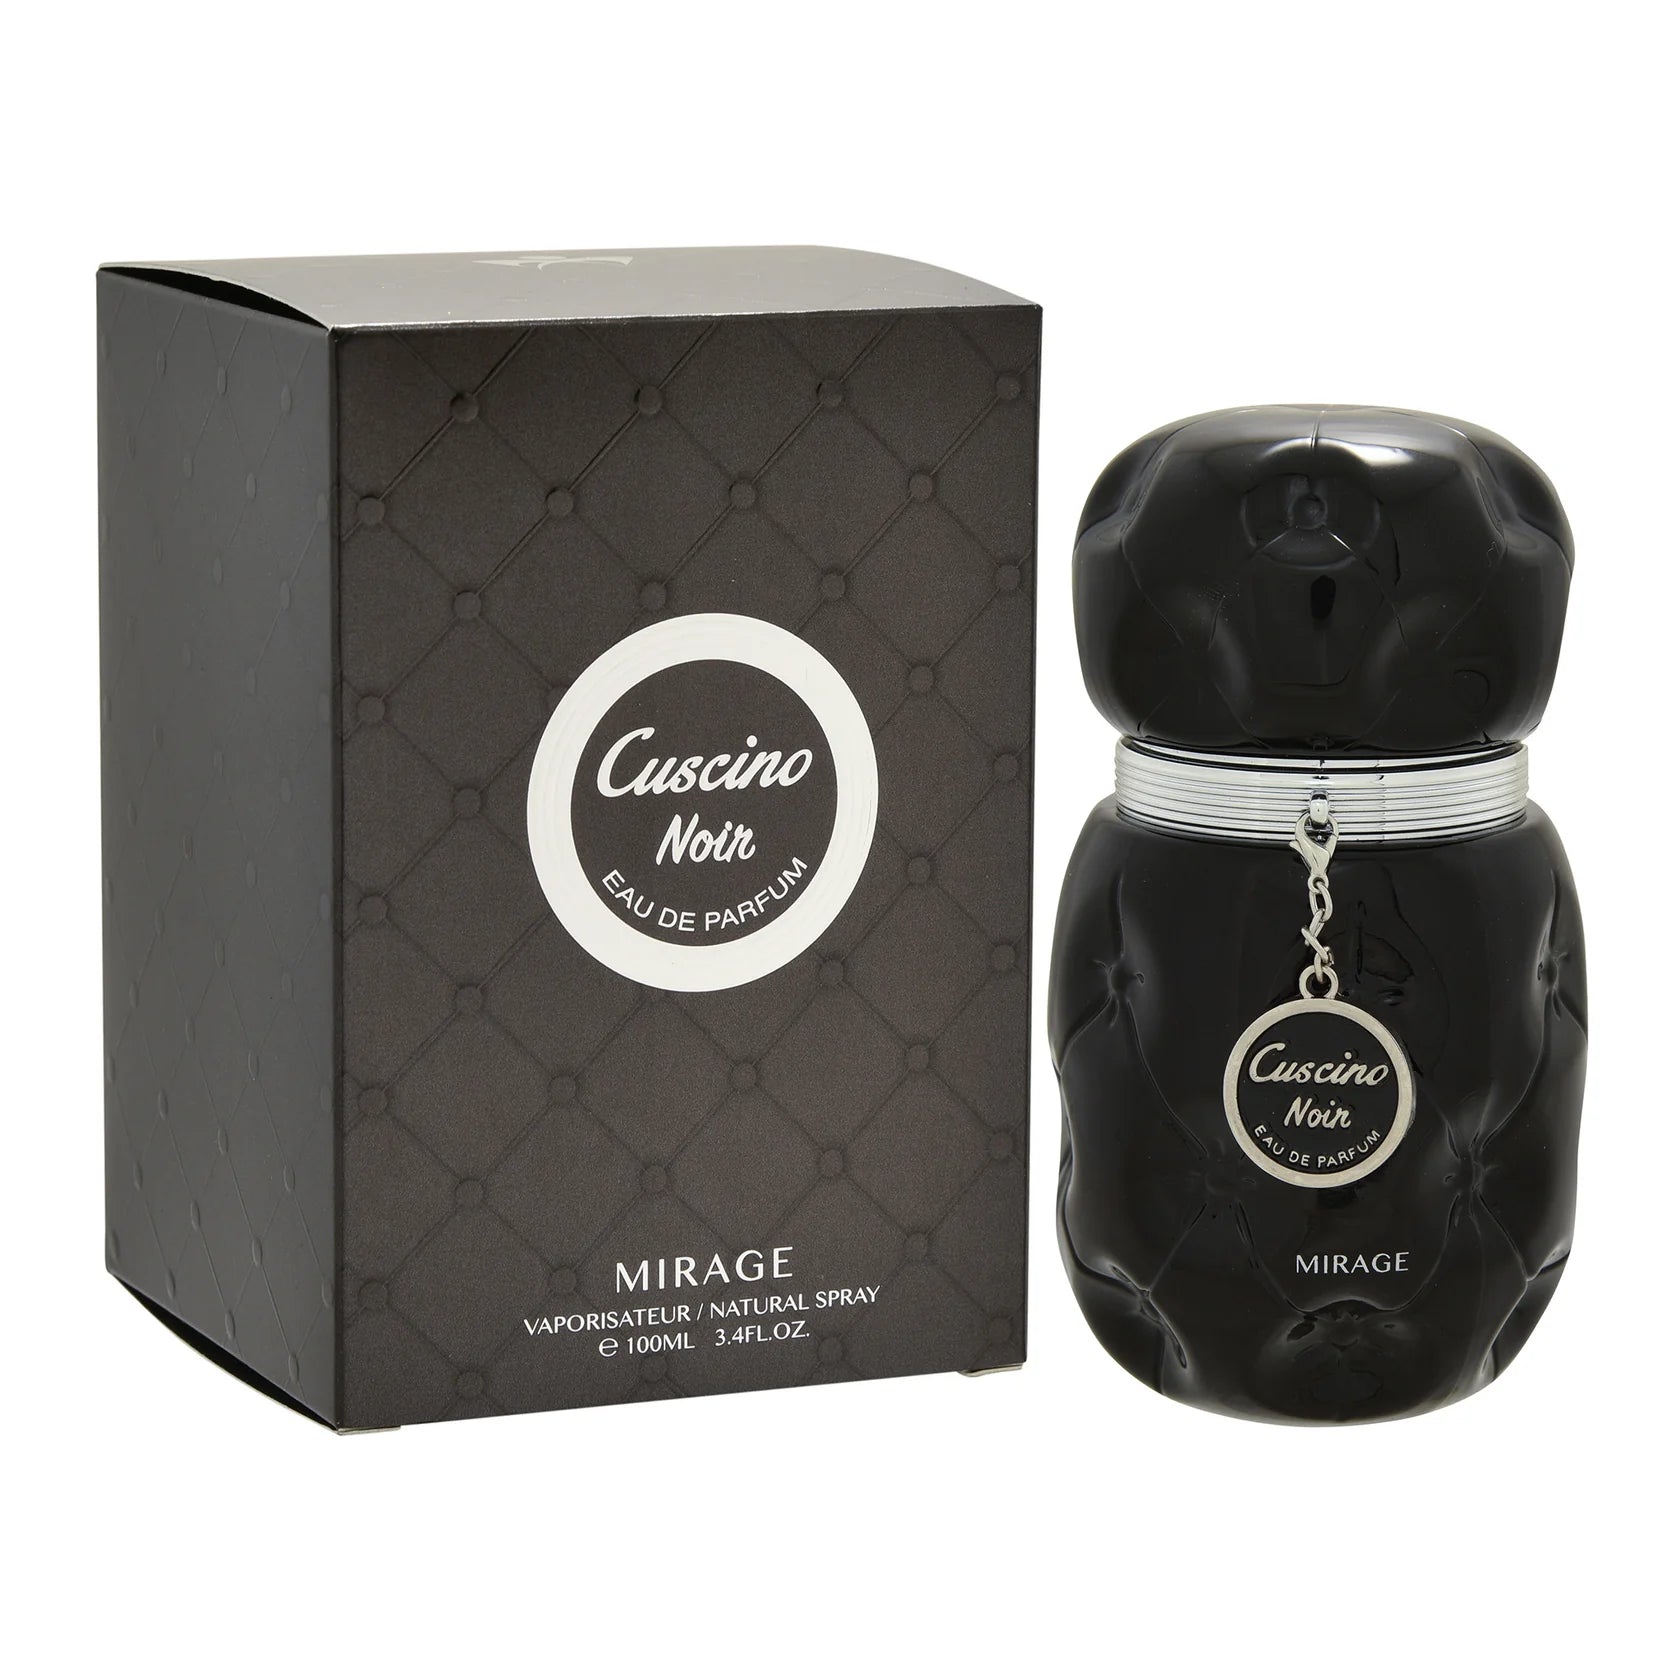 Cuscino Noir EDP (100ml) spray perfume by Cuscino Noir | Khan El Khalili